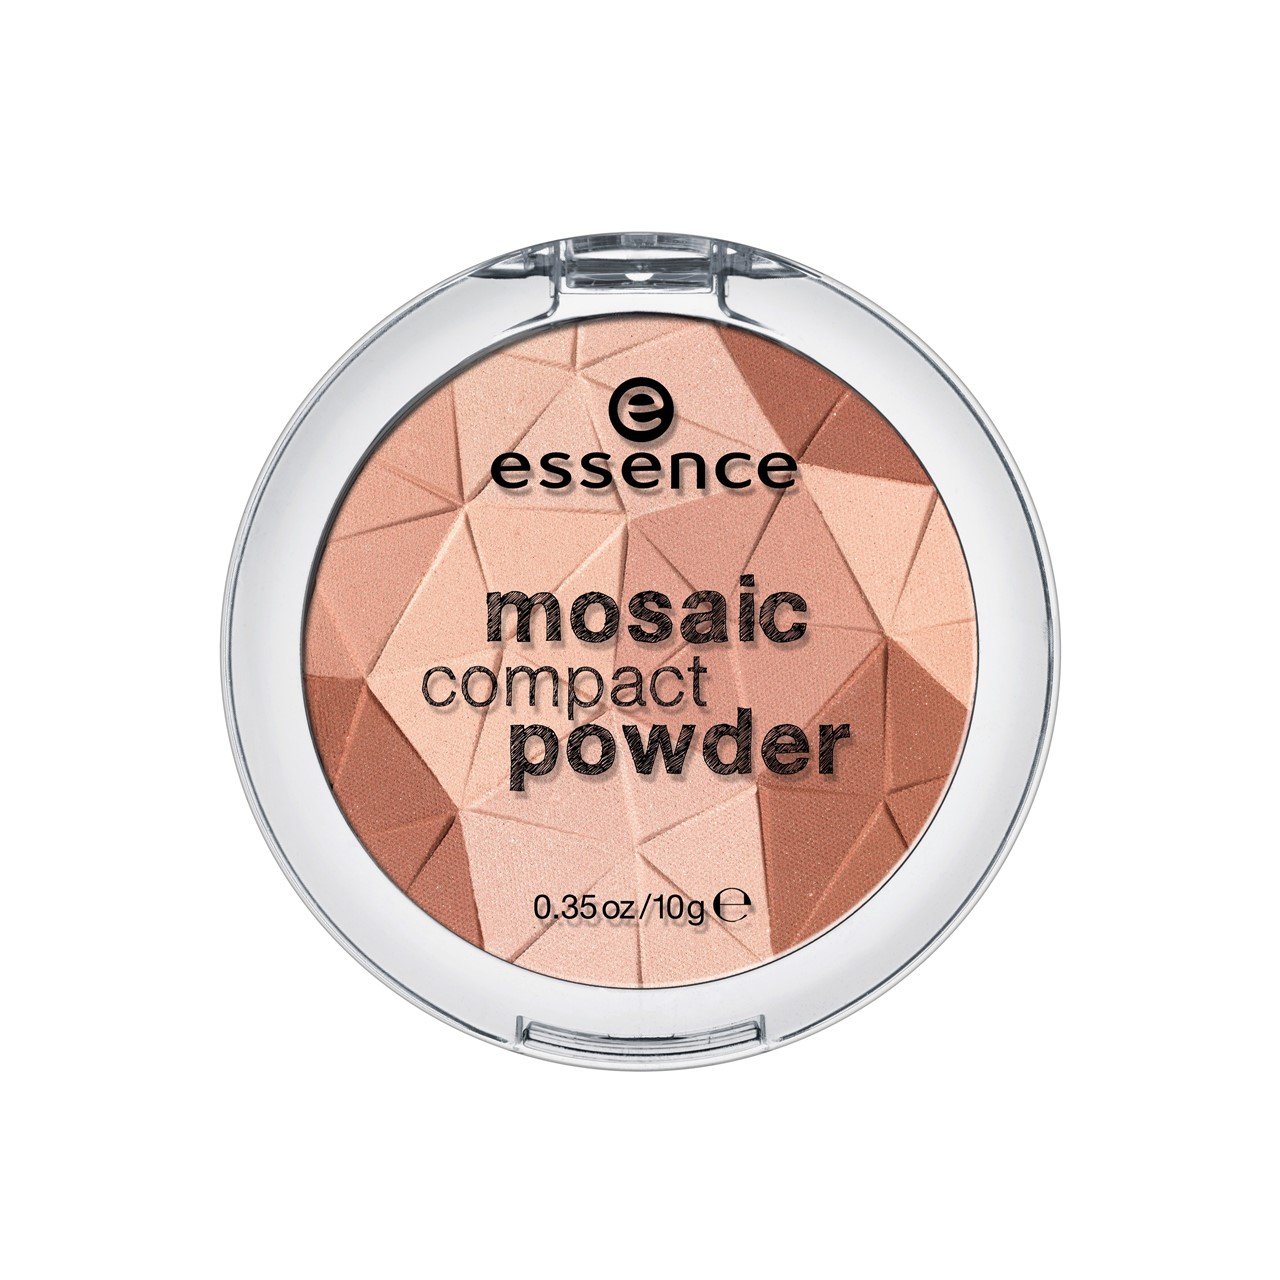 essence Mosaic Compact Powder 01 Sunkissed Beauty 10g (0.35oz)